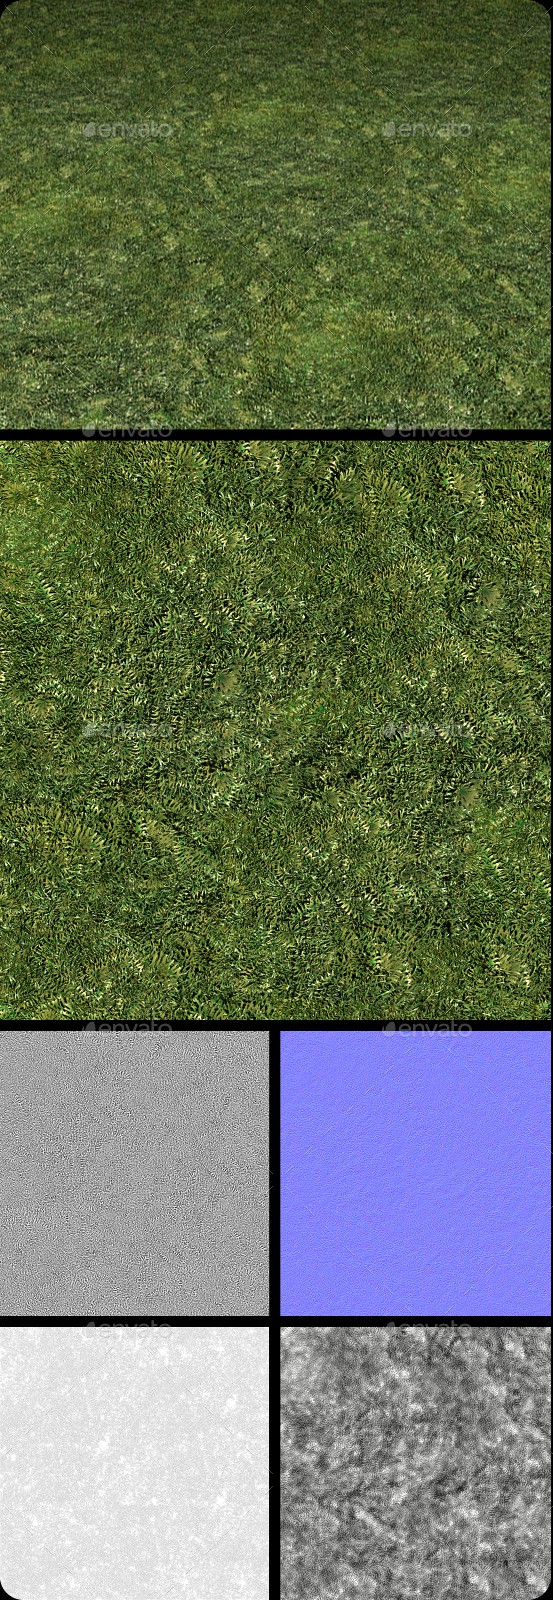 Grass Hi-Res Tile Texture